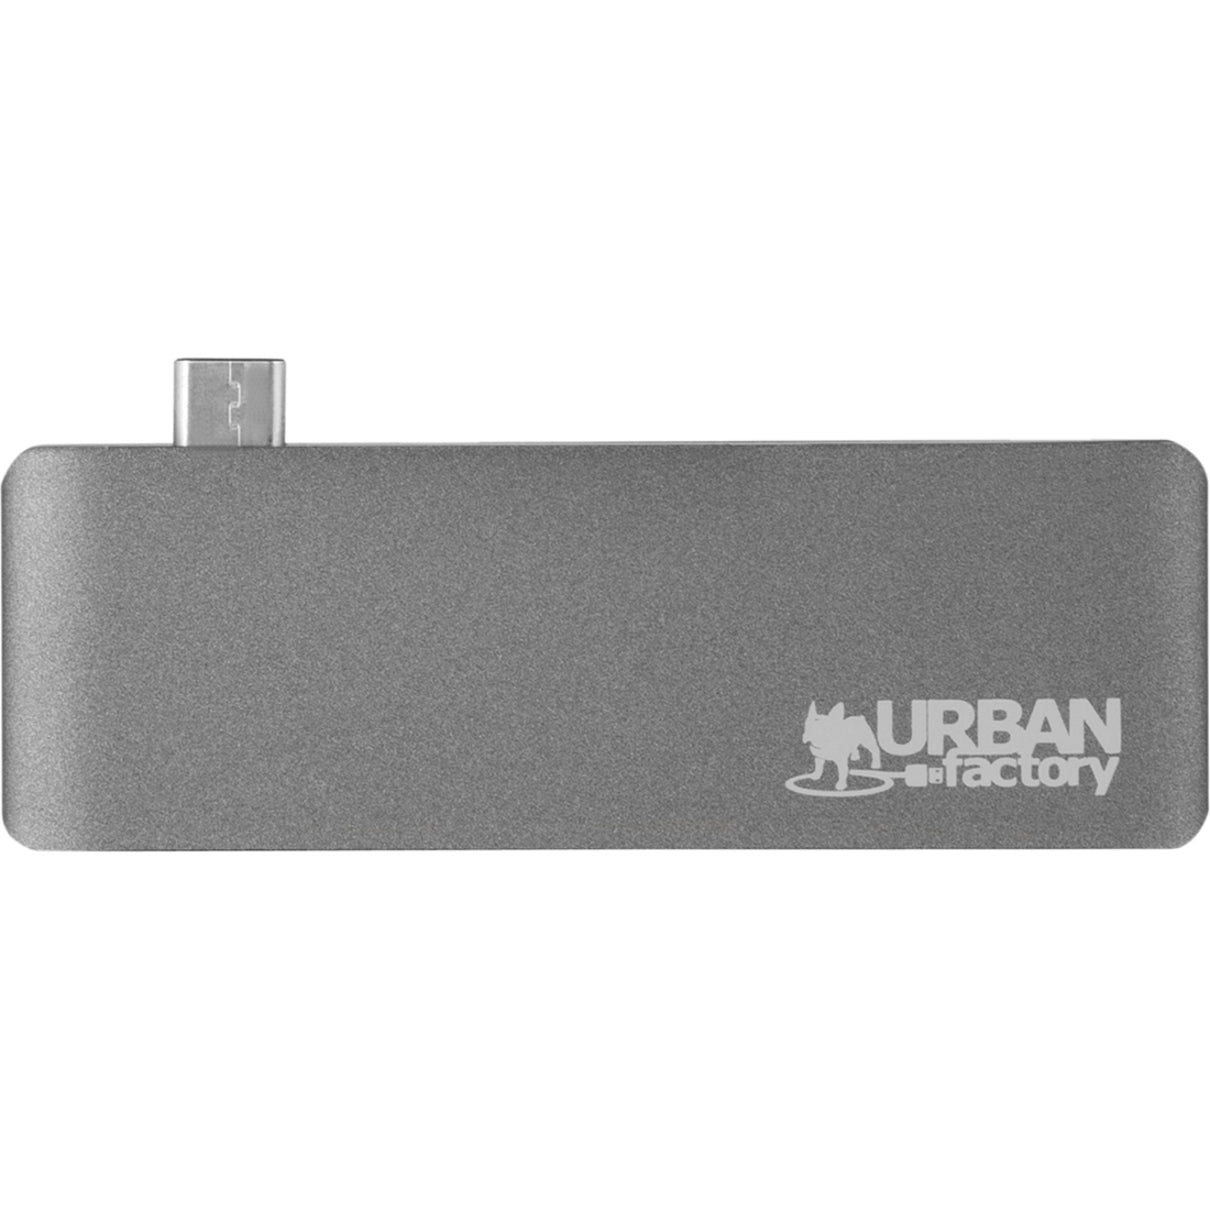 Urban Factory TCH03UF Type-C Hub 3xUSB 3.0, 3 USB Ports, Sideral Gray